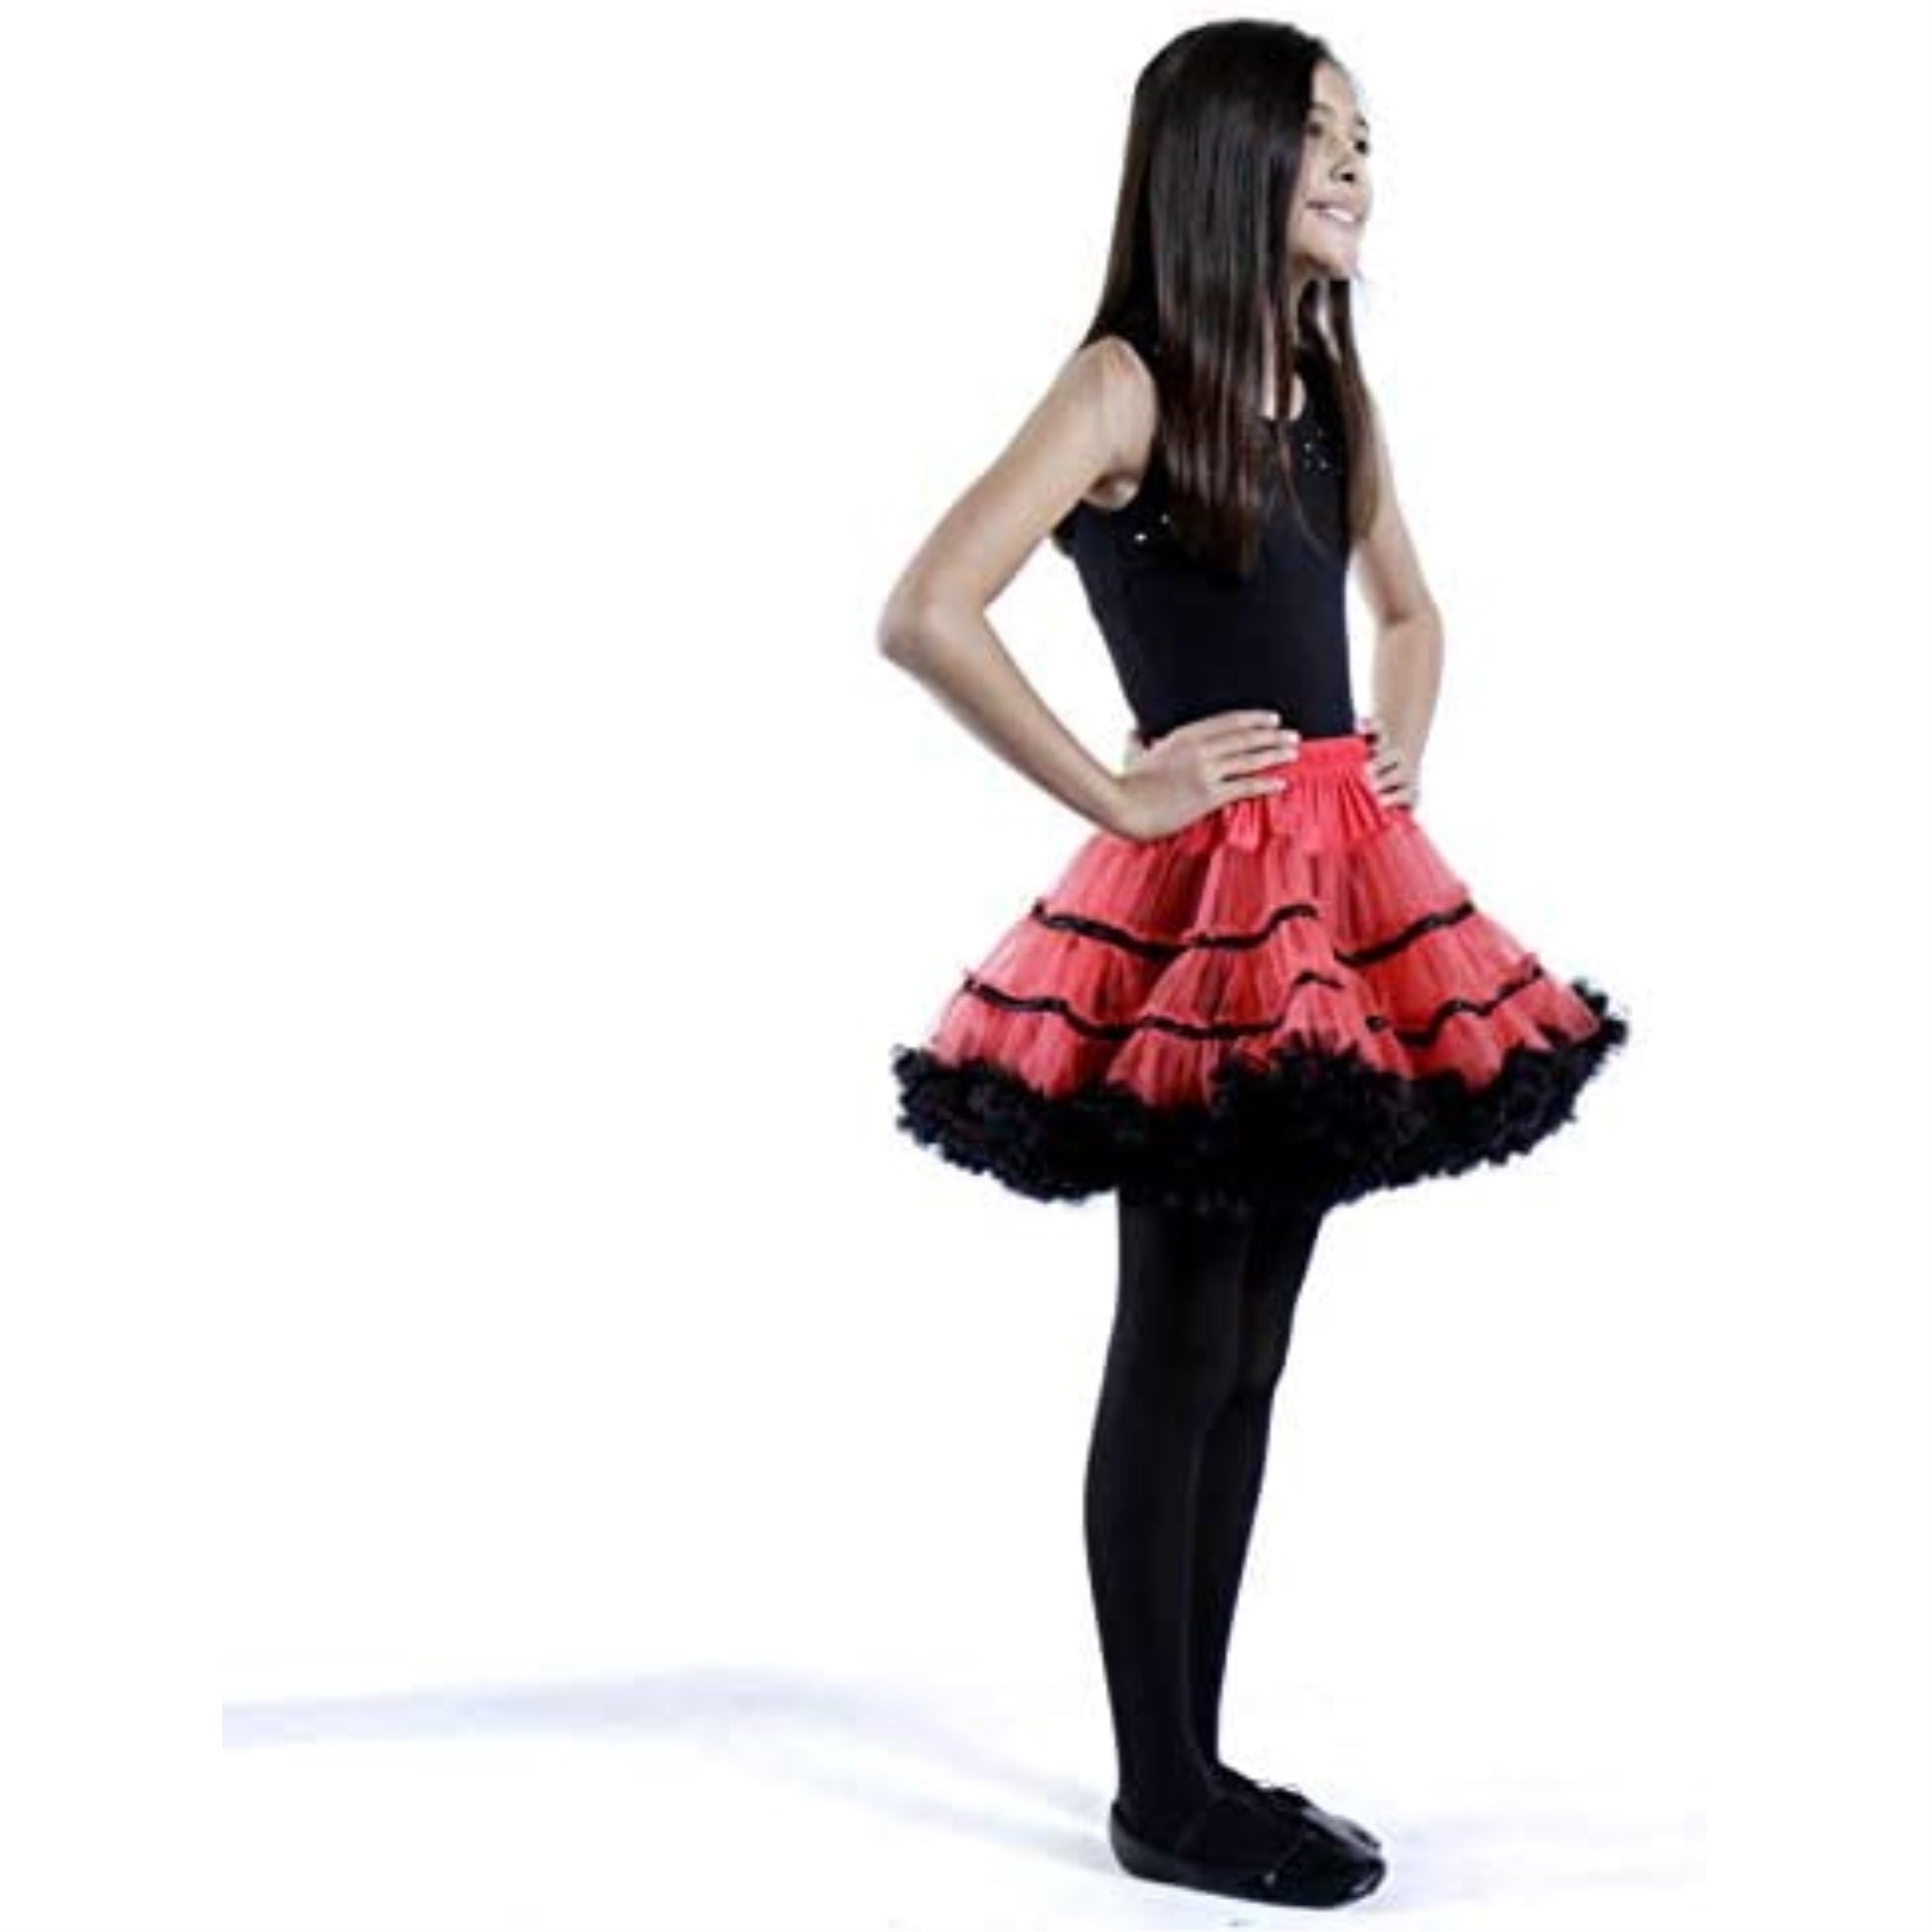 Adult Tulle Costume Petticoat - Red/Black